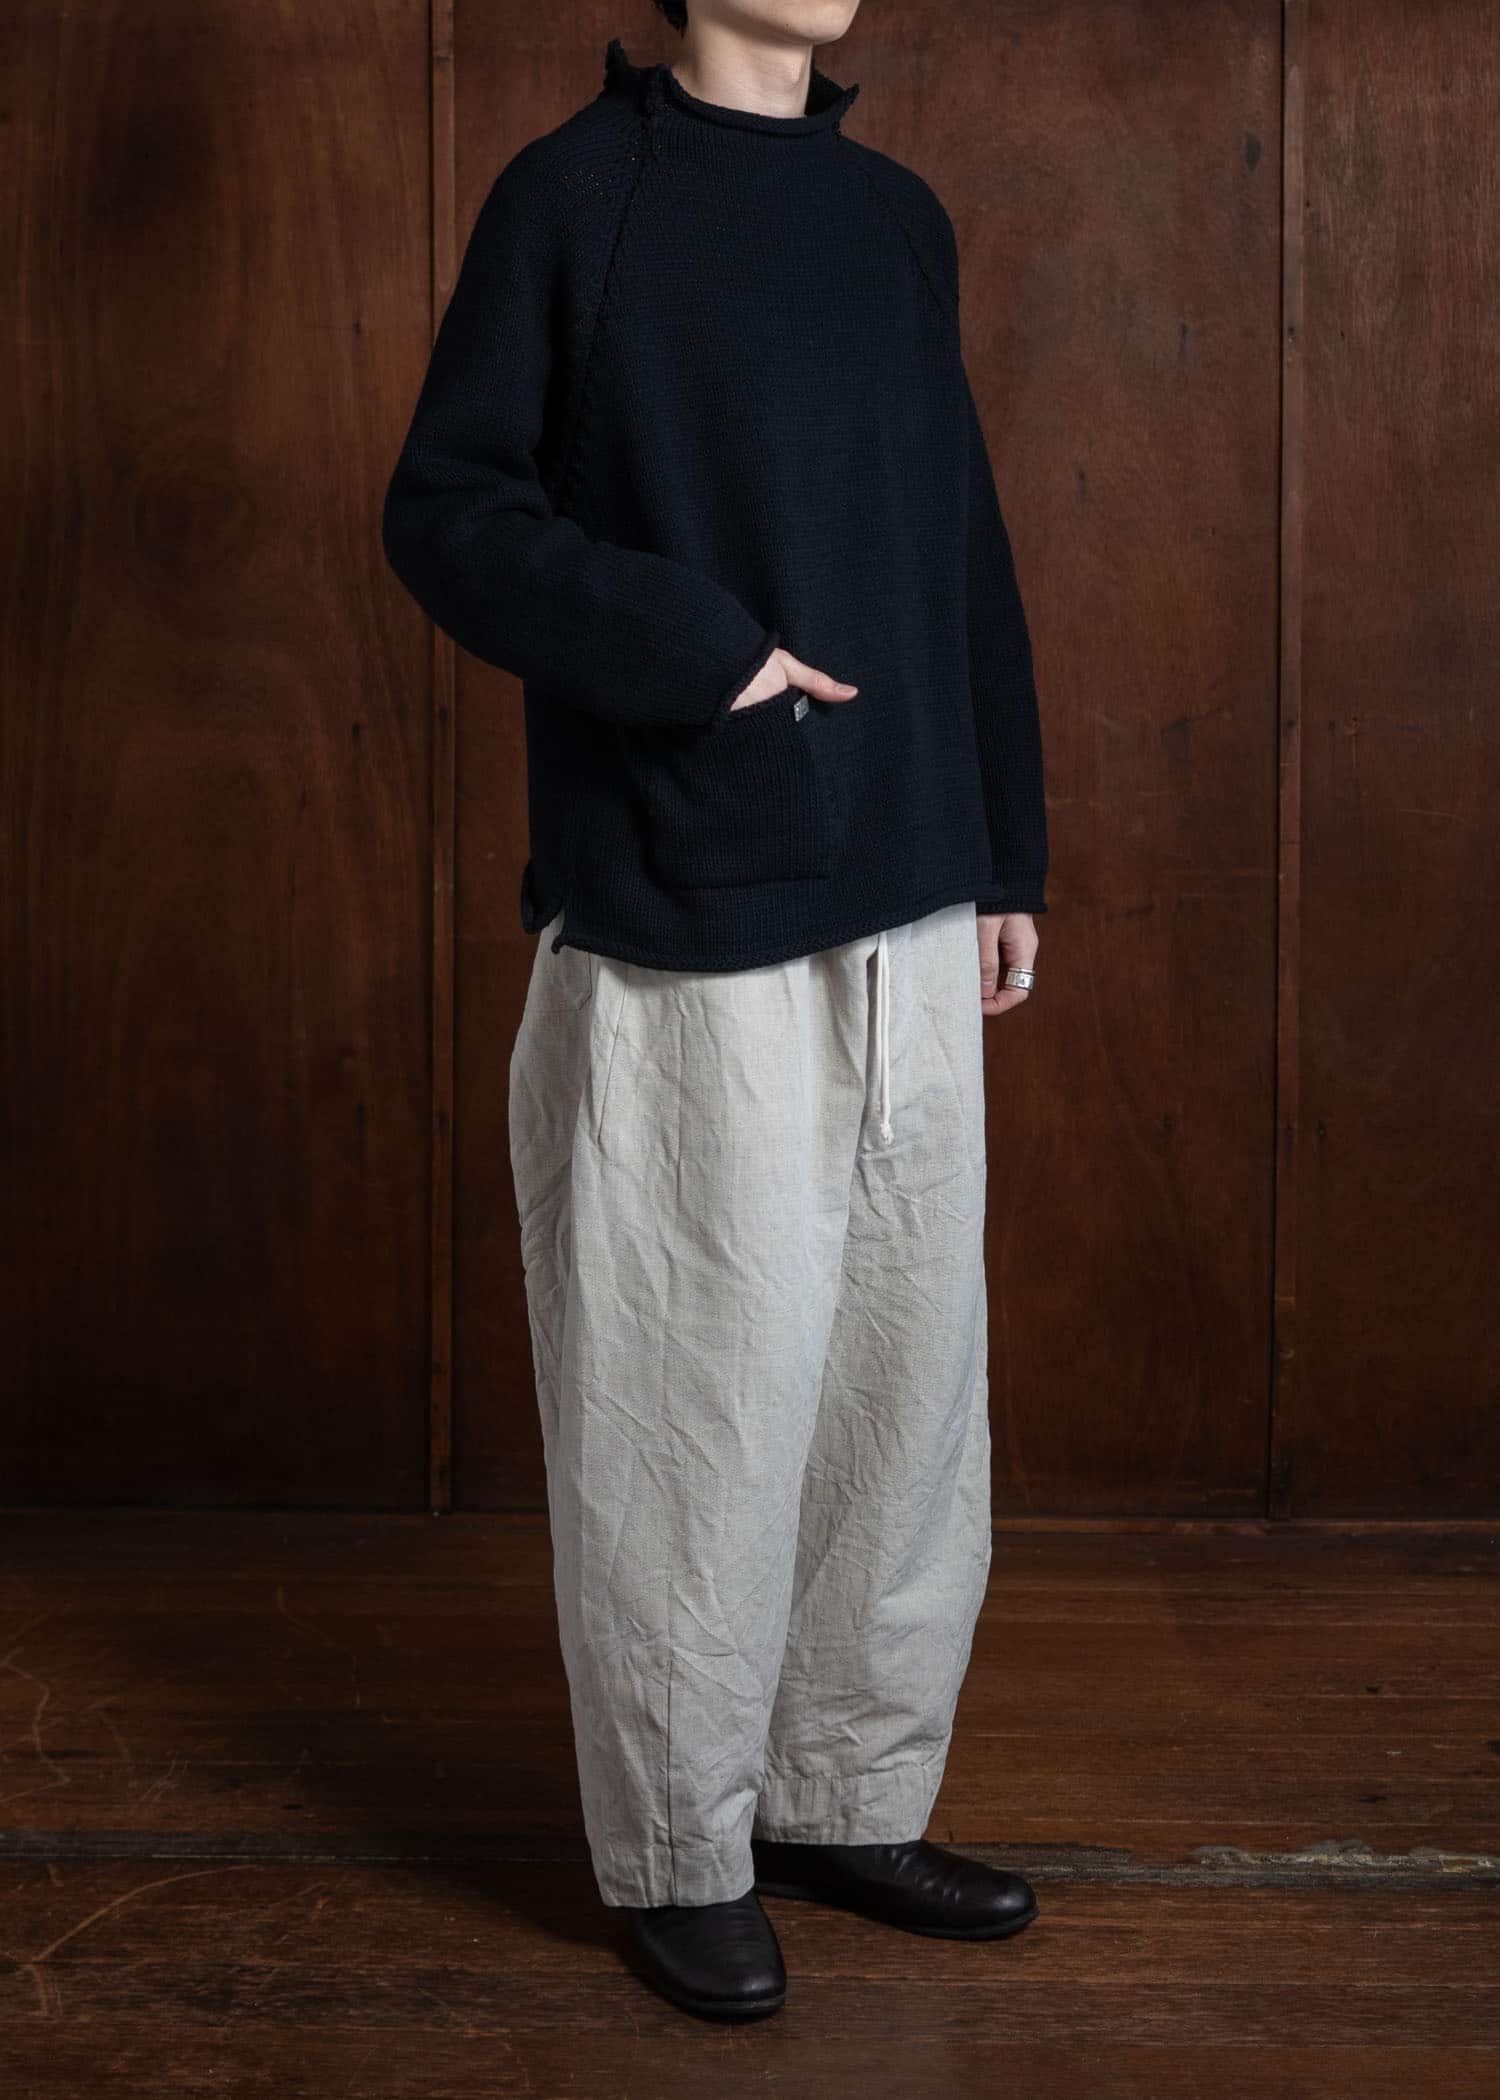 XENIA TELUNTS Fisherman Sweater	Indigo-dyed Black